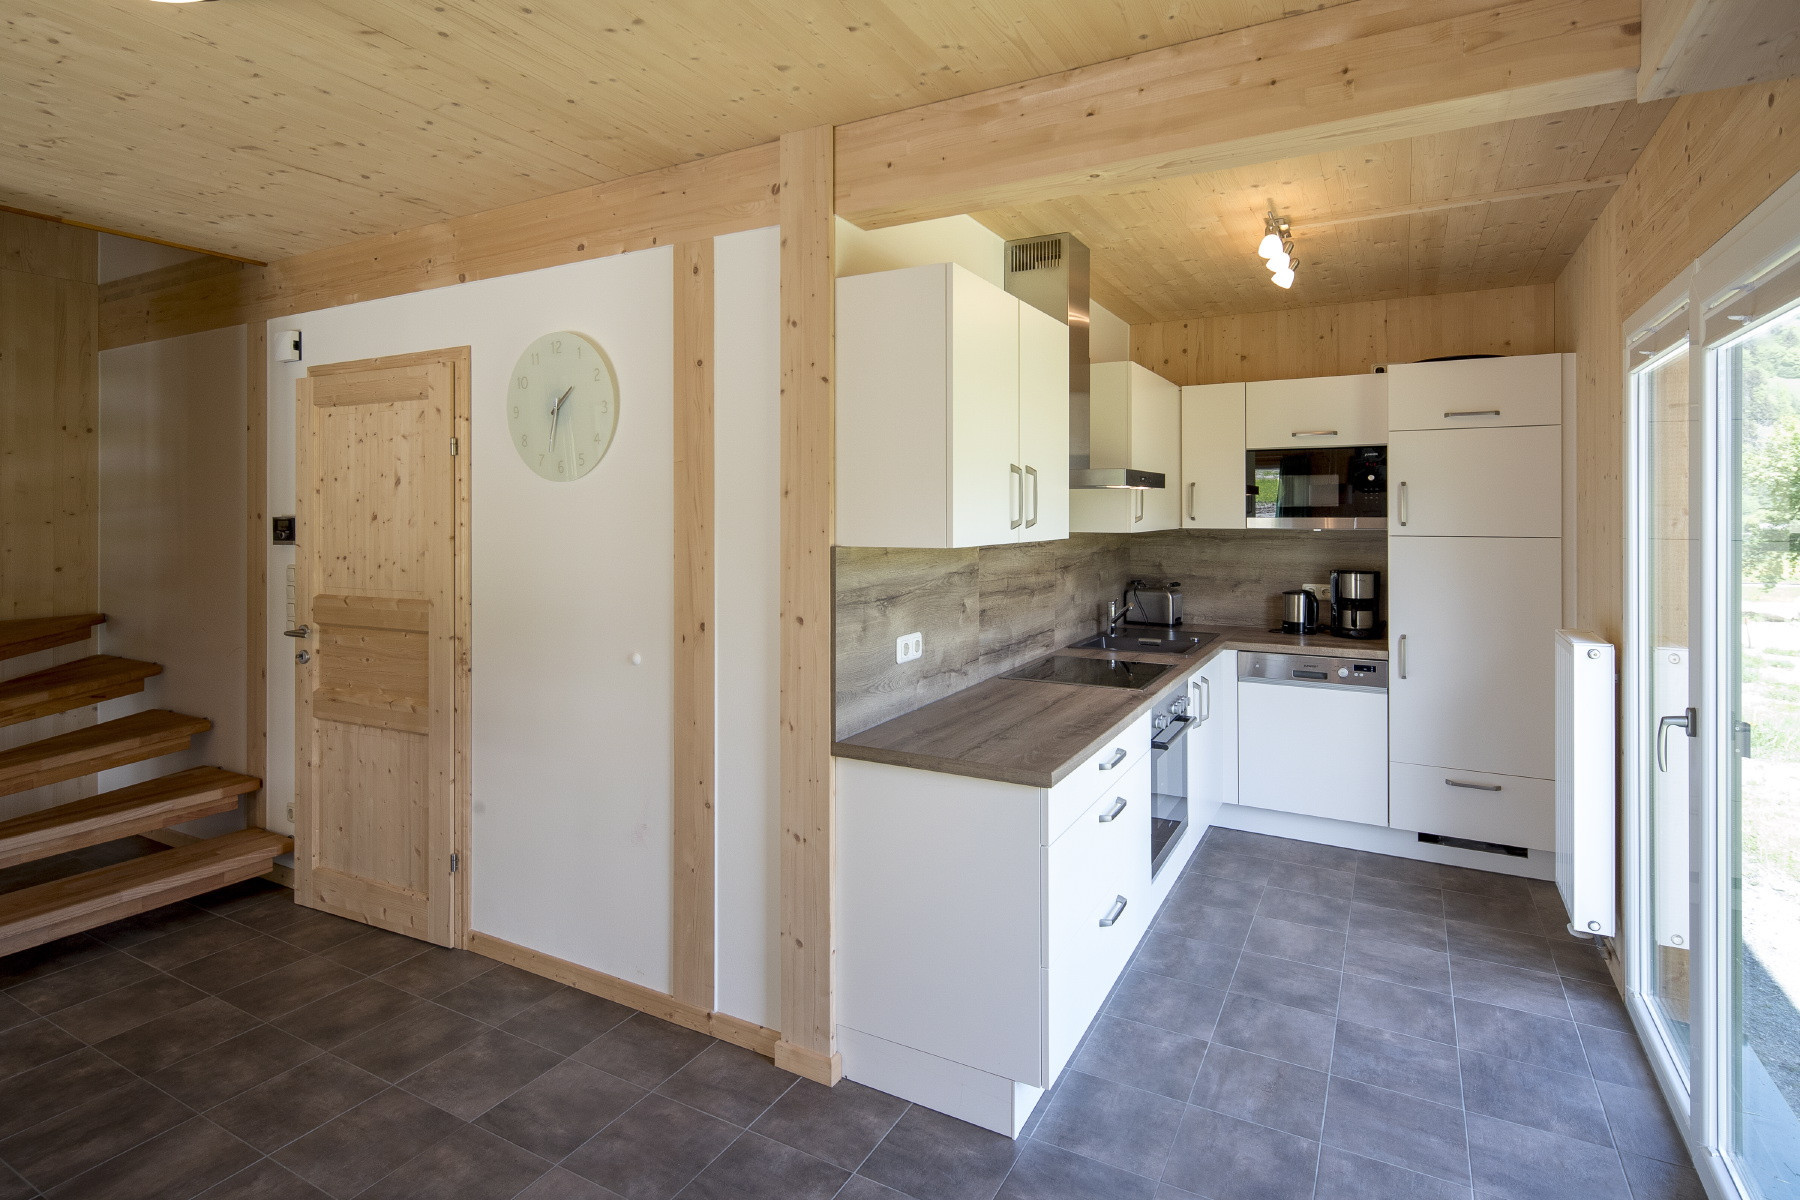  in St. Georgen am Kreischberg - Chalet # 53 with 4 bedrooms & IR sauna